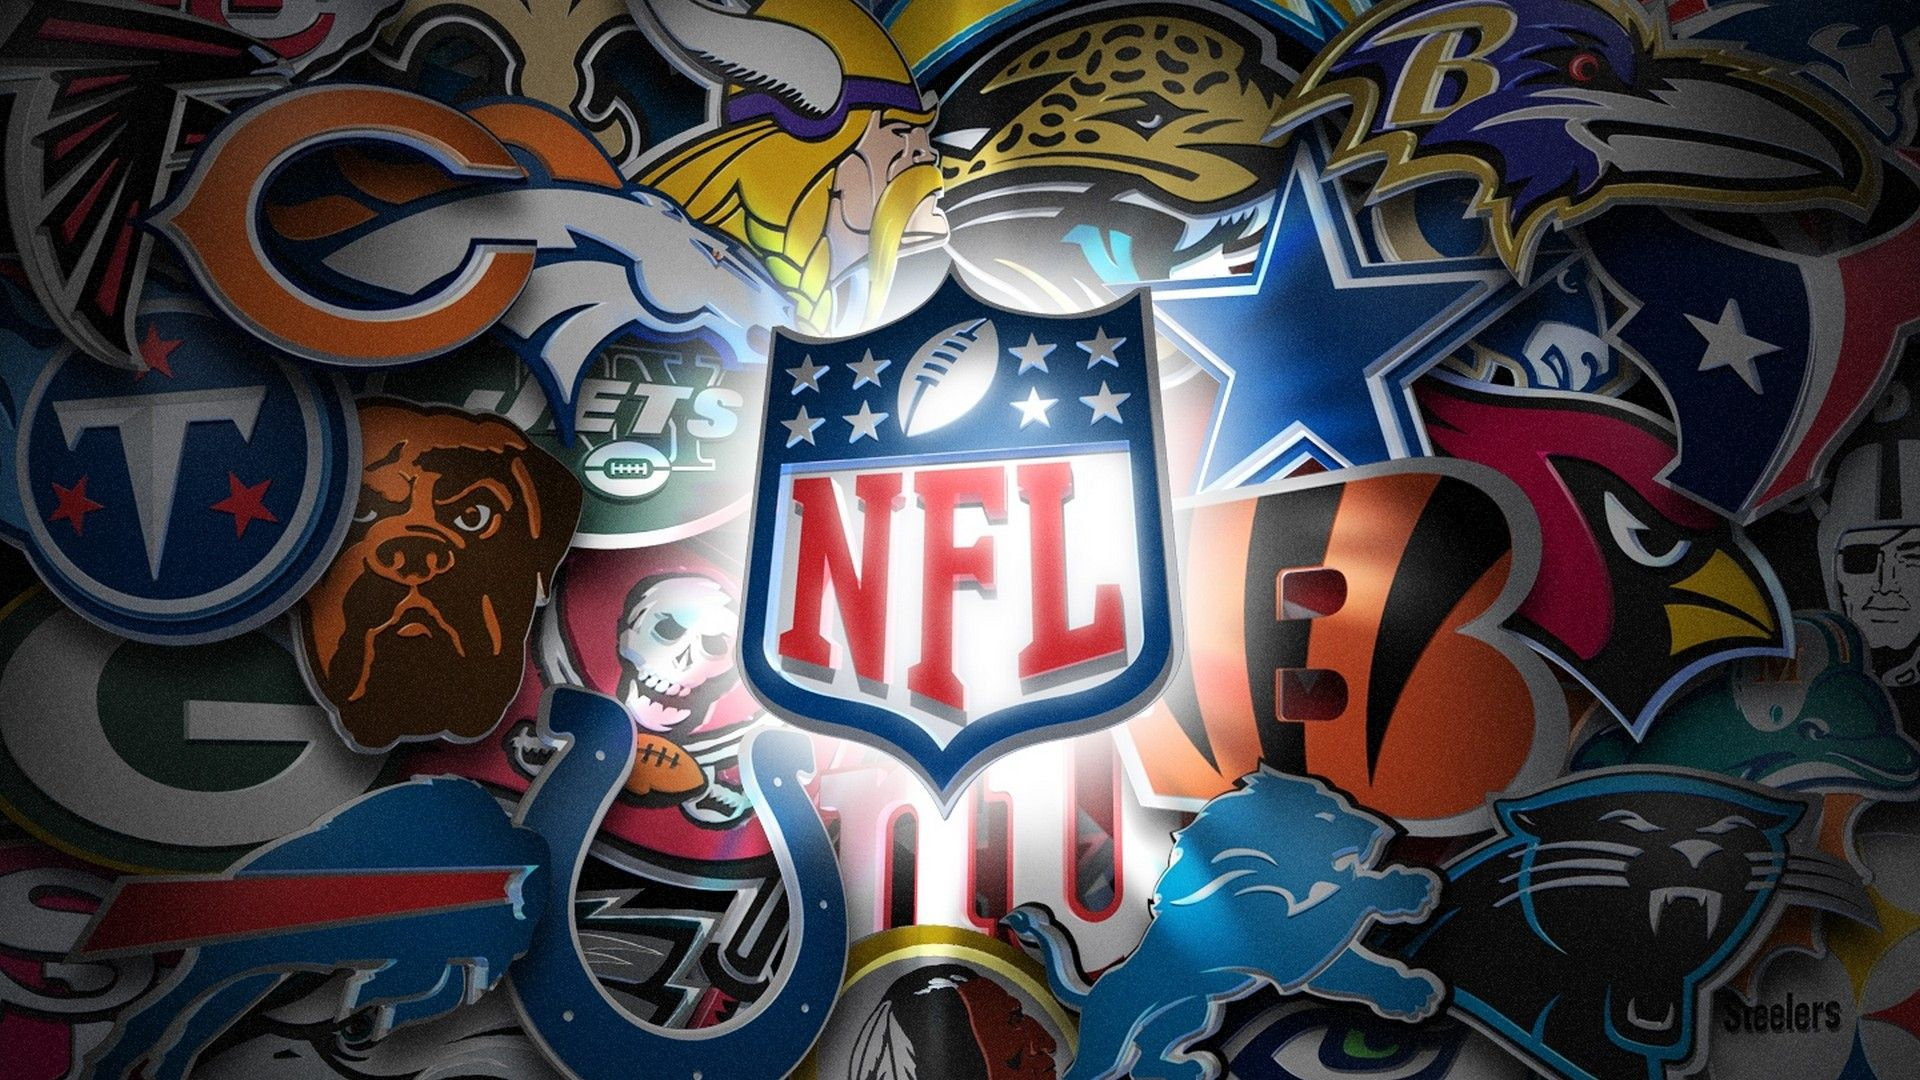 1920x1080 Cool NFL Mac Backgrounds 2022 NFL Football Wallpapers | Nfl teams logos, Football wallpaper, Nfl football wallpaper